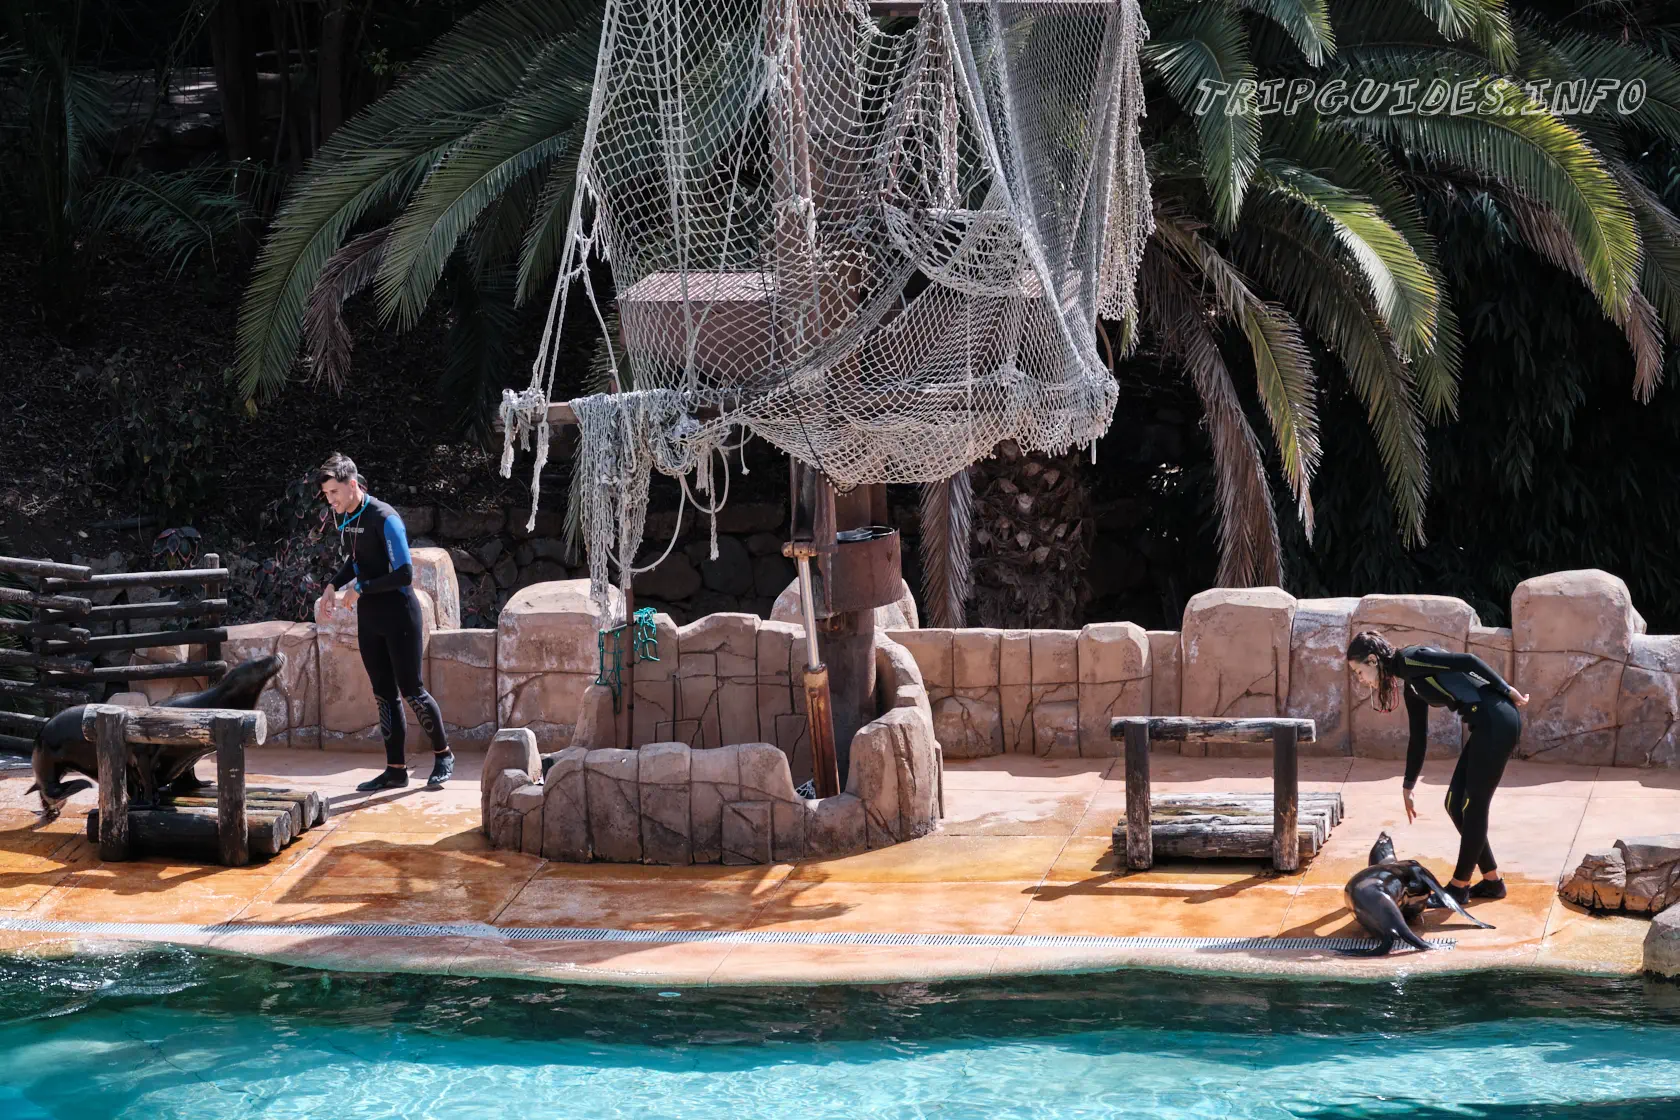 Парк Орлов (Jungle park) на Тенерифе - Шоу с морскими львами